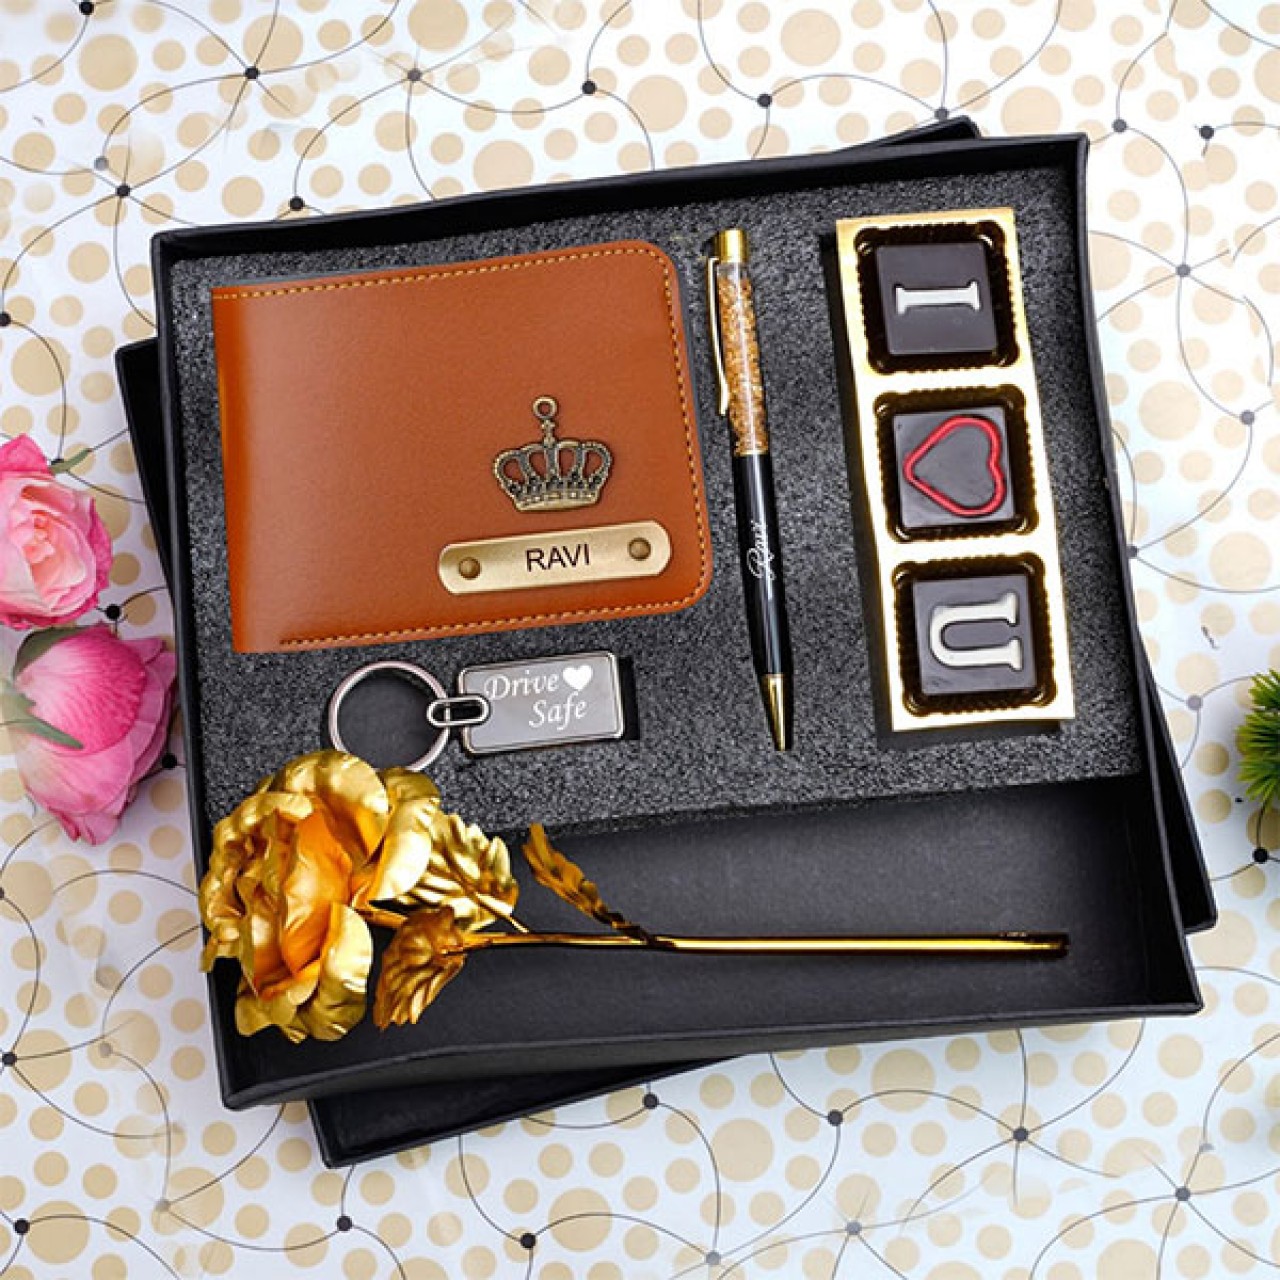 Chocolate & Wallet gift set